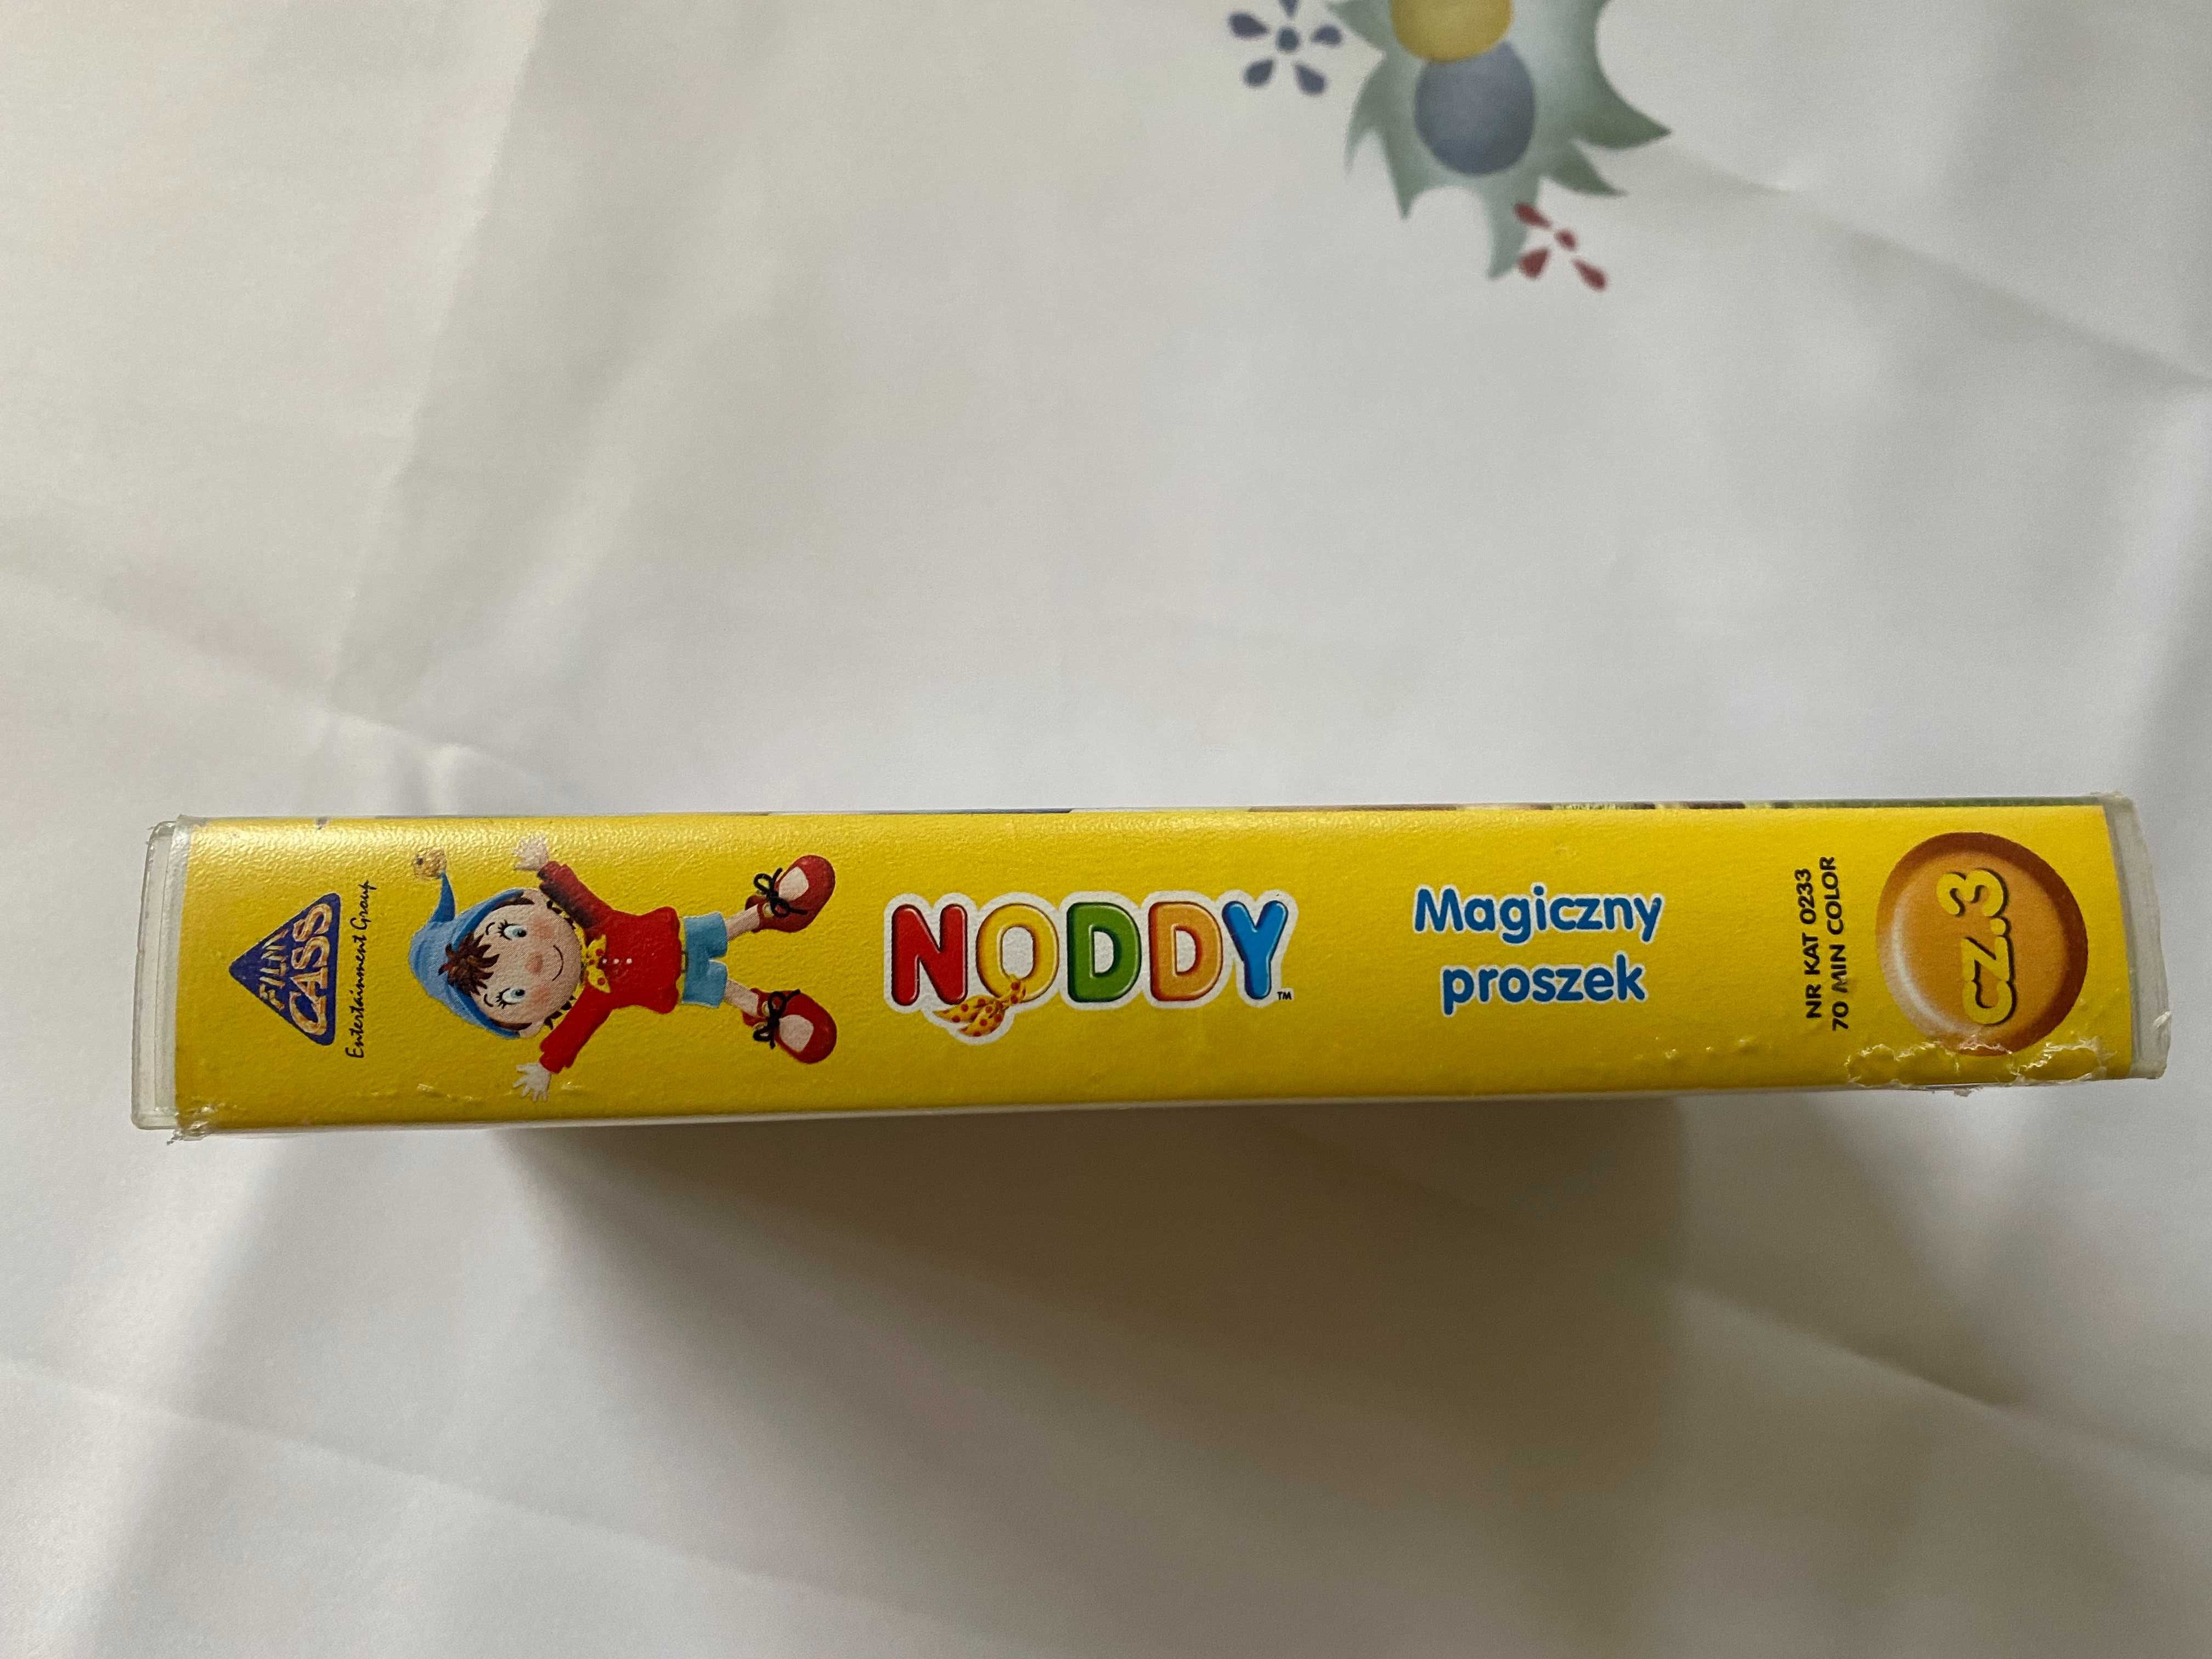 Noddy-Magiczny proszek-bajki na kasecie VHS